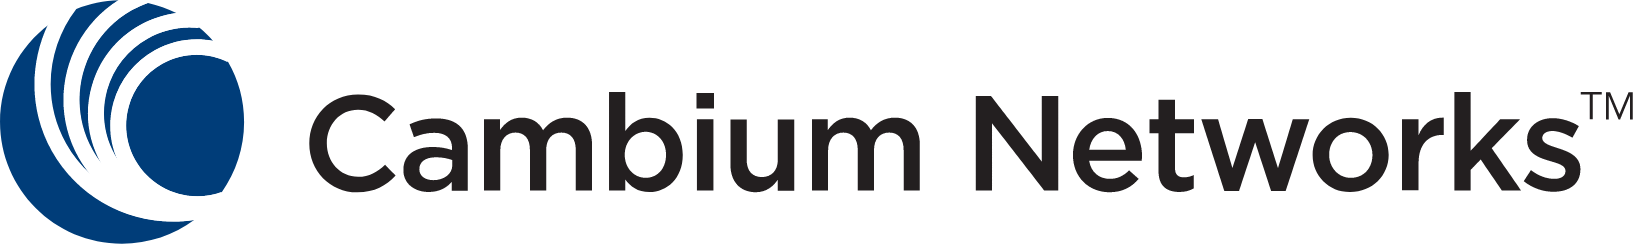 Cambium Networks logo large (transparent PNG)